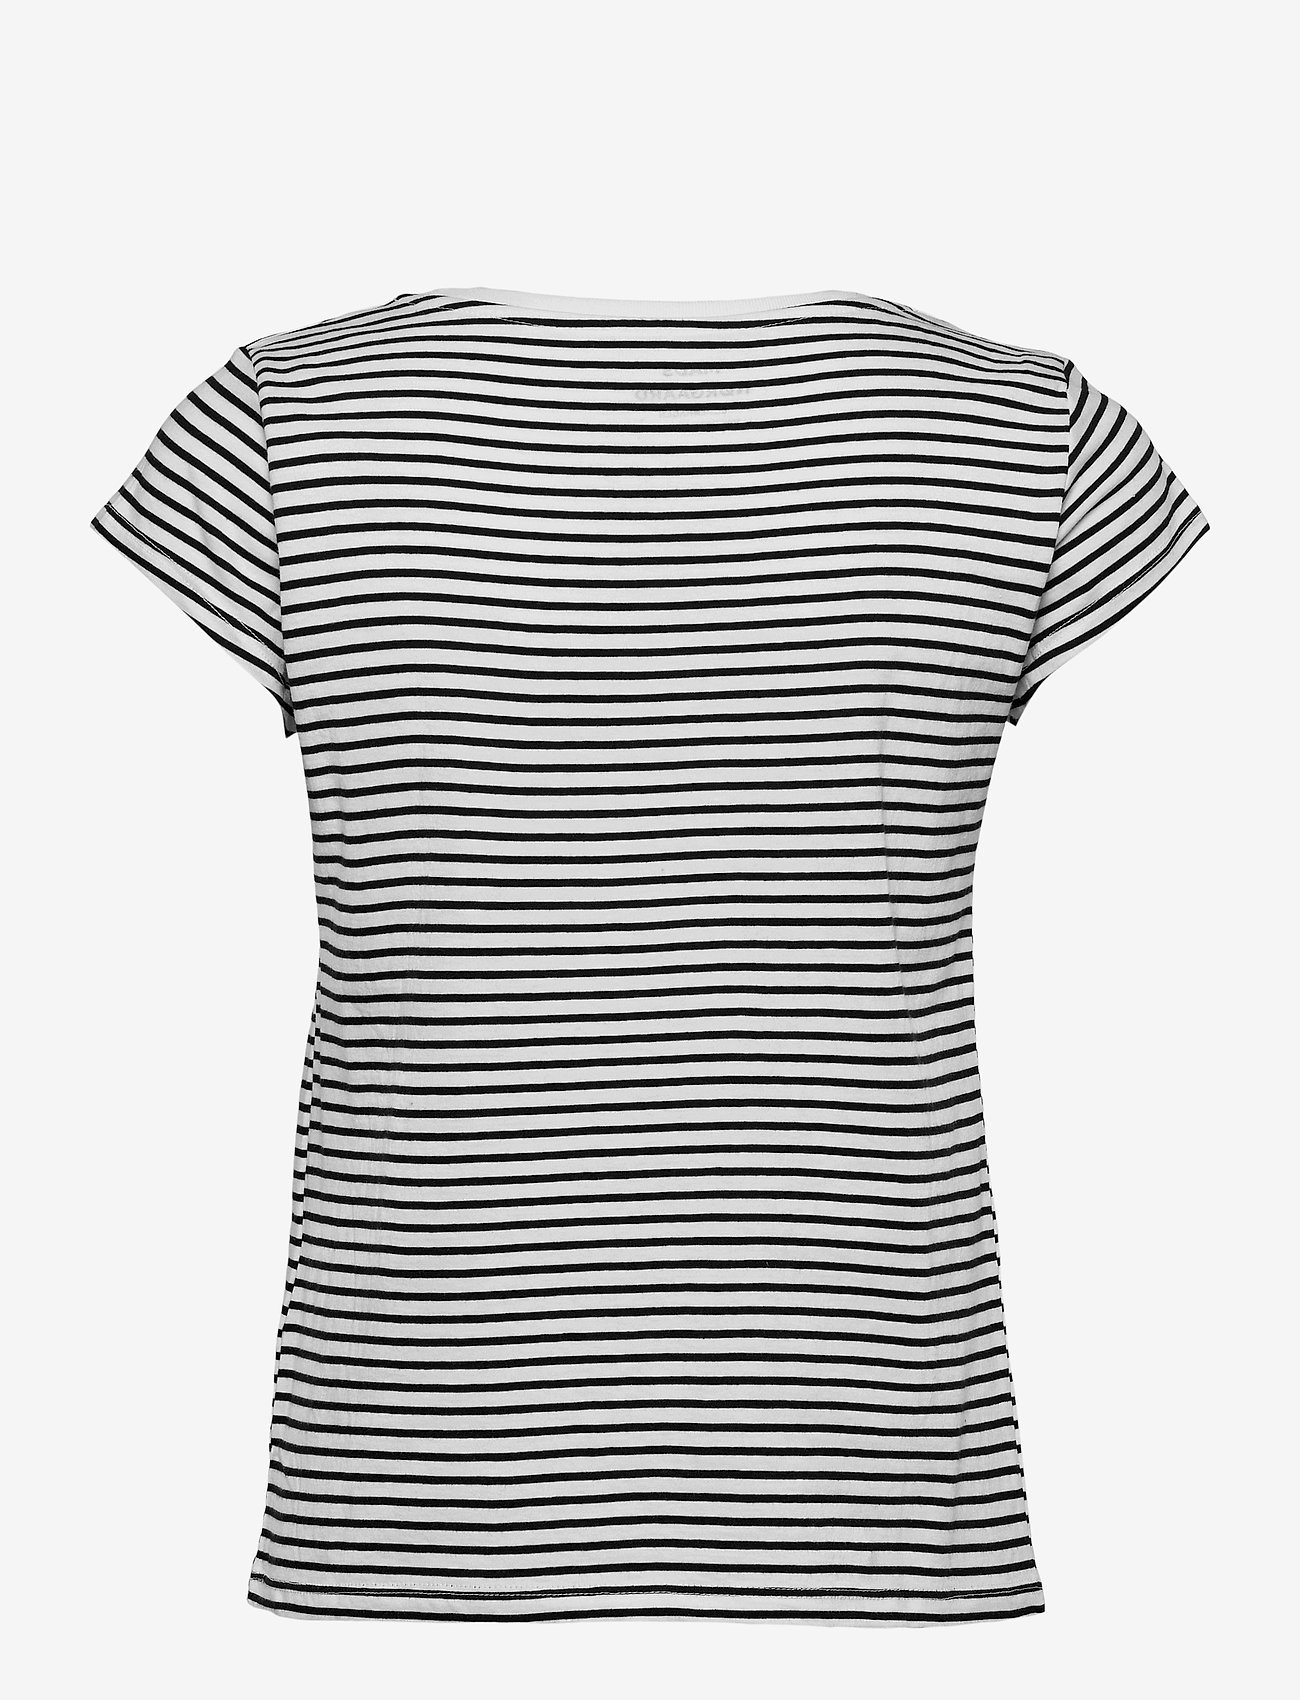 Mads Nørgaard - Organic Favorite Stripe Teasy - lowest prices - white/black - 1